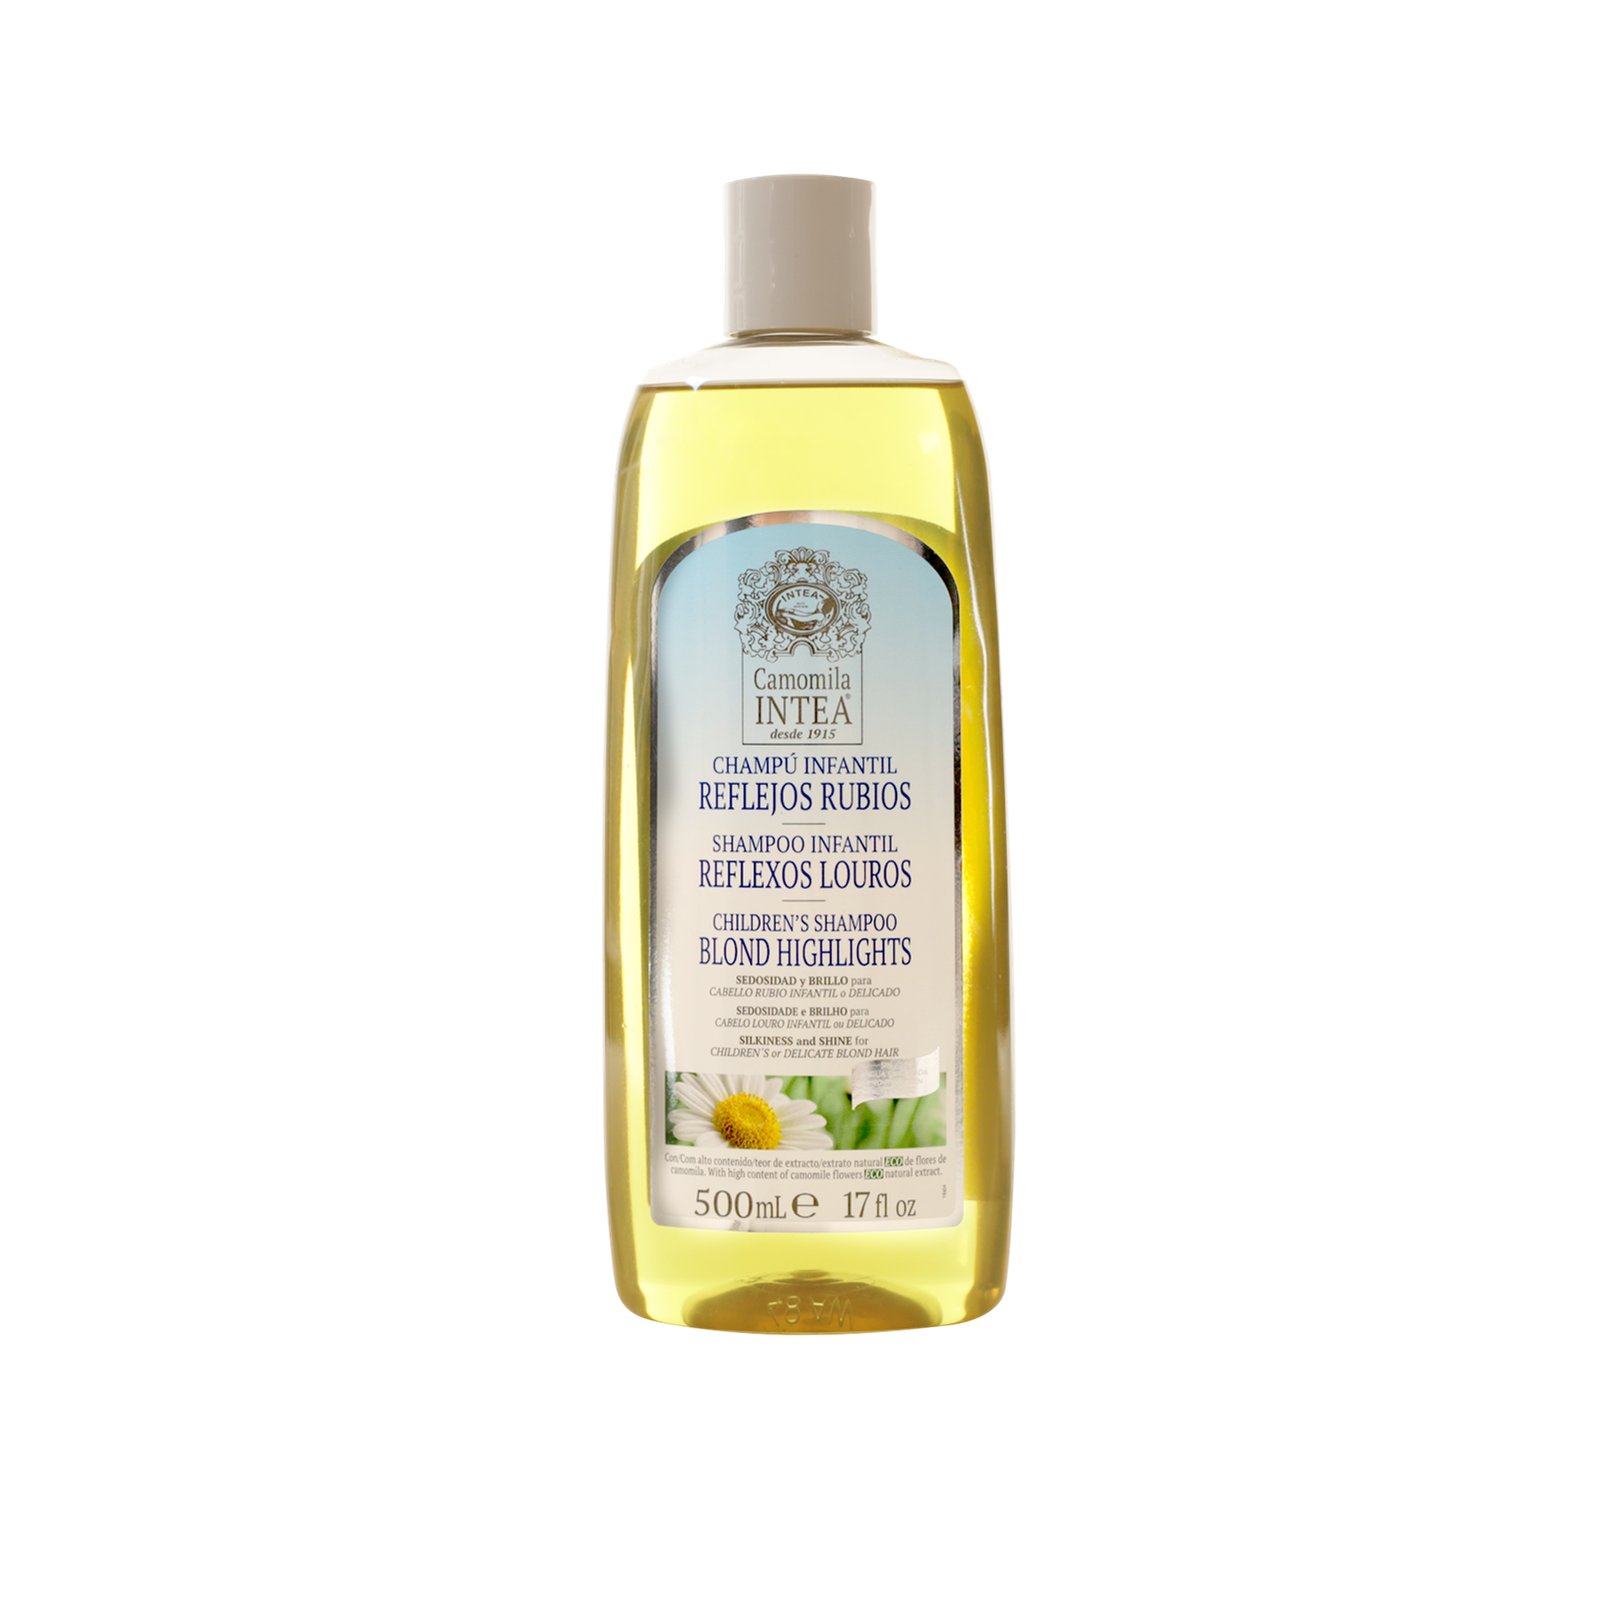 Intea Children's Shampoo Blond Highlights 500ml (16.91fl oz)